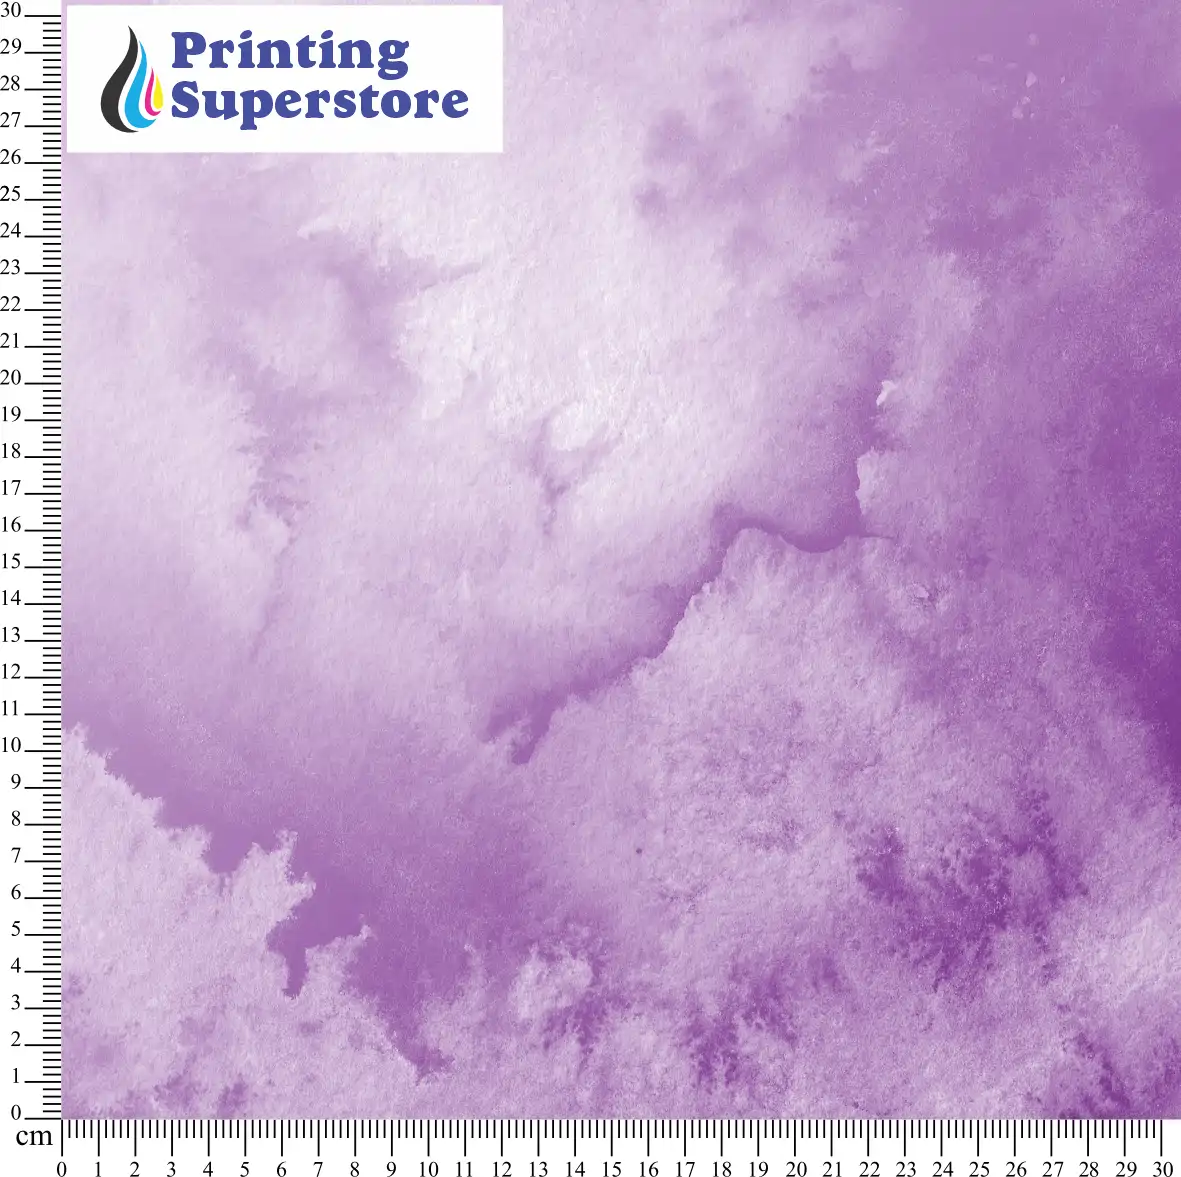 Purple Watercolour theme pattern printed on Self Adhesive Vinyl (SAV), Heat Transfer Vinyl (HTV) and Cardstock.